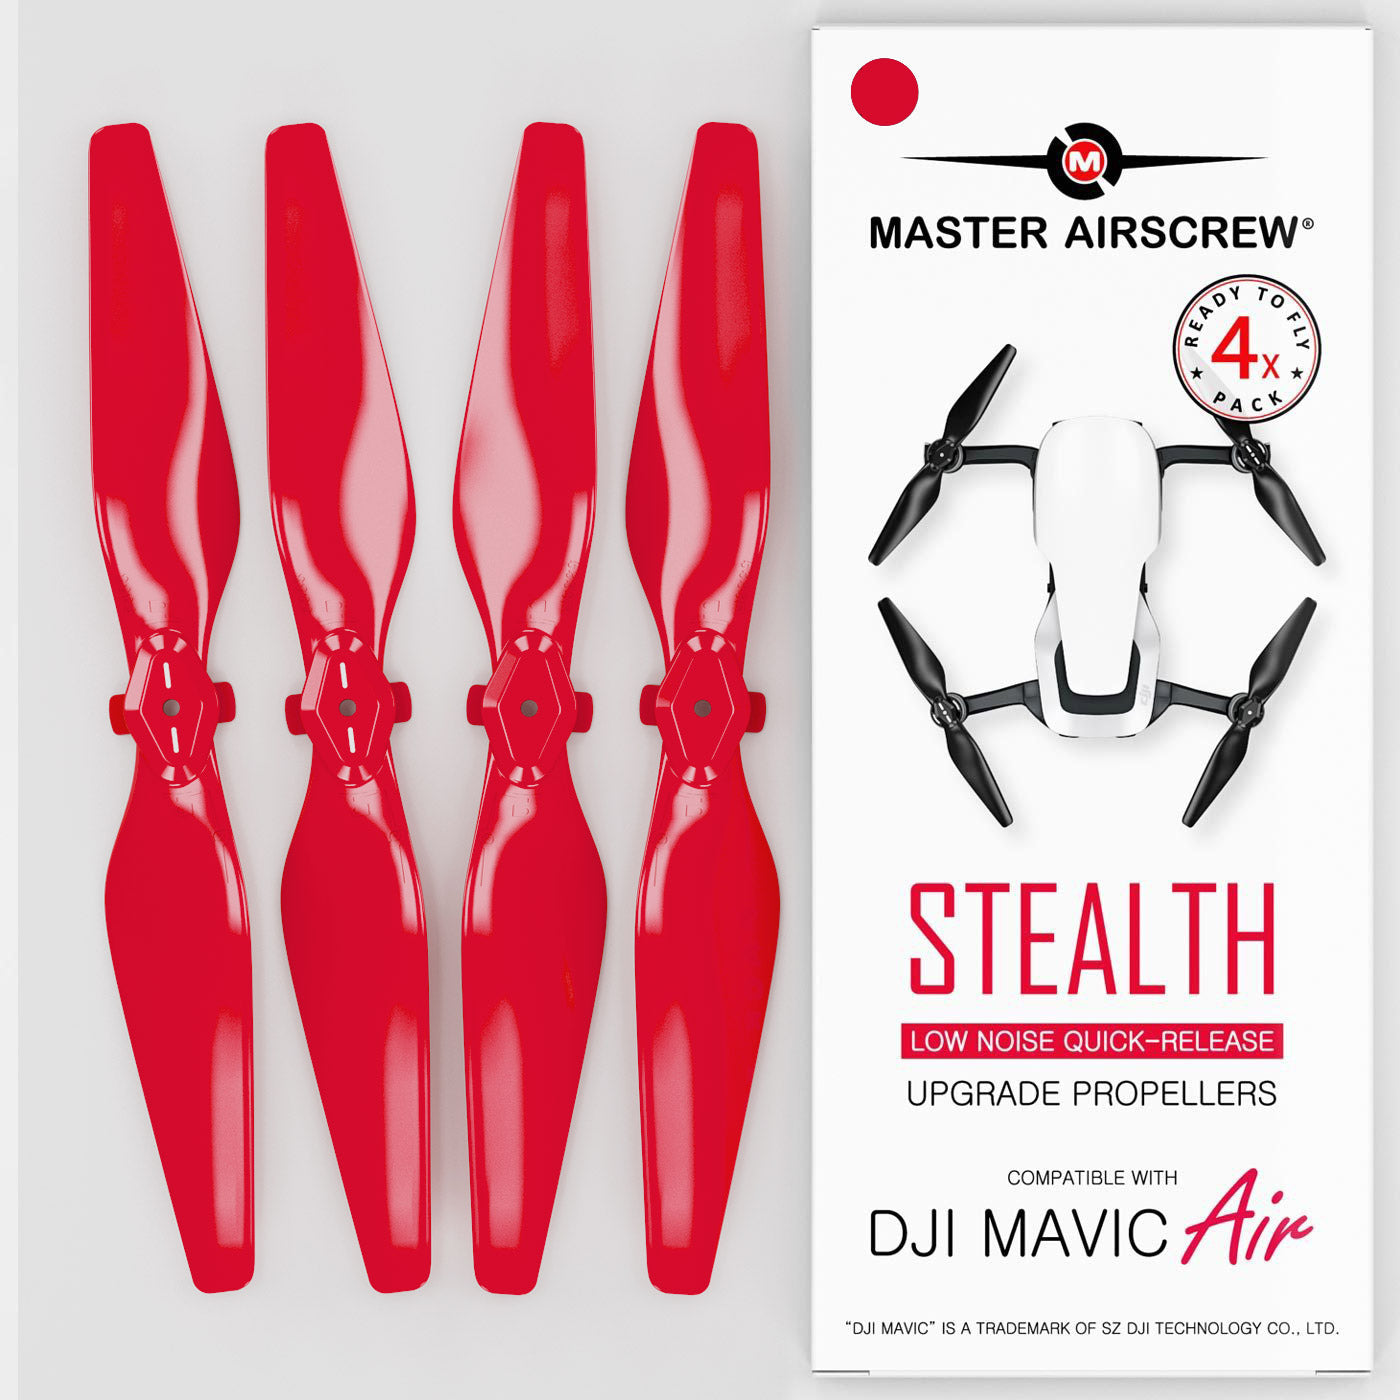 DJI Mavic Air STEALTH Upgrade Propellers - x4 Red - Master Airscrew